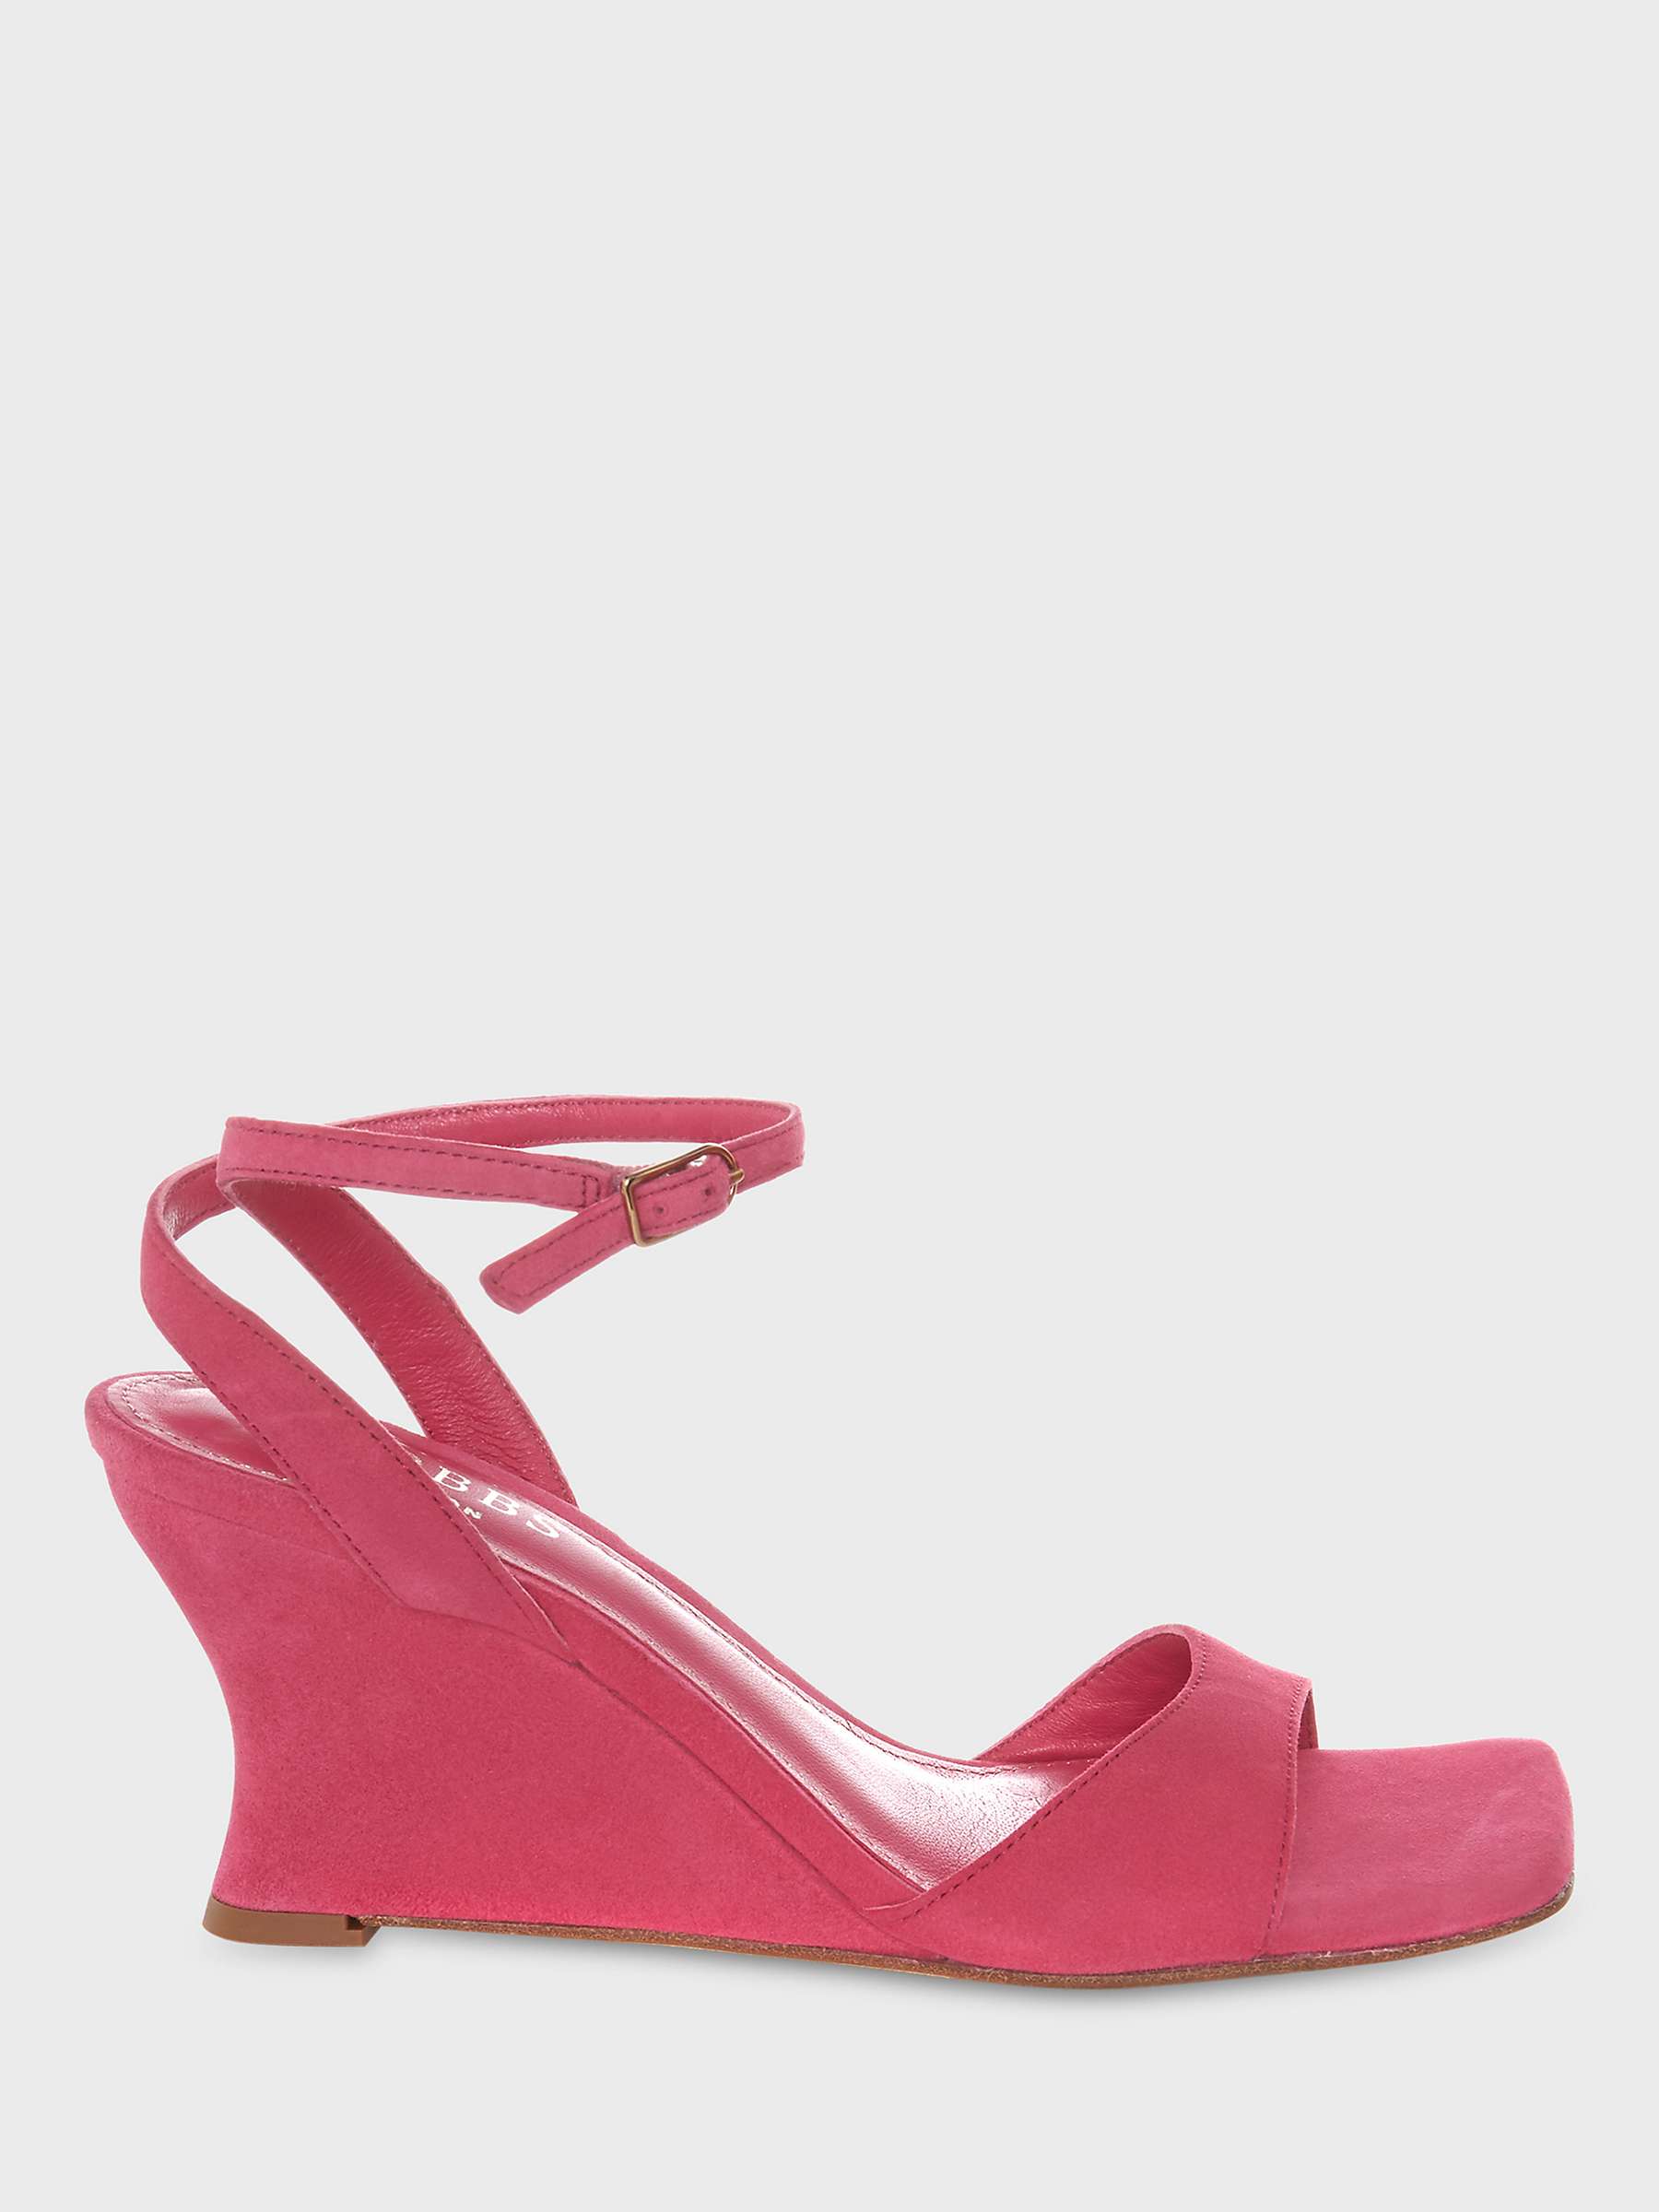 Buy Hobbs Cordelia Suede Wedge Sandals, Party Pink Online at johnlewis.com